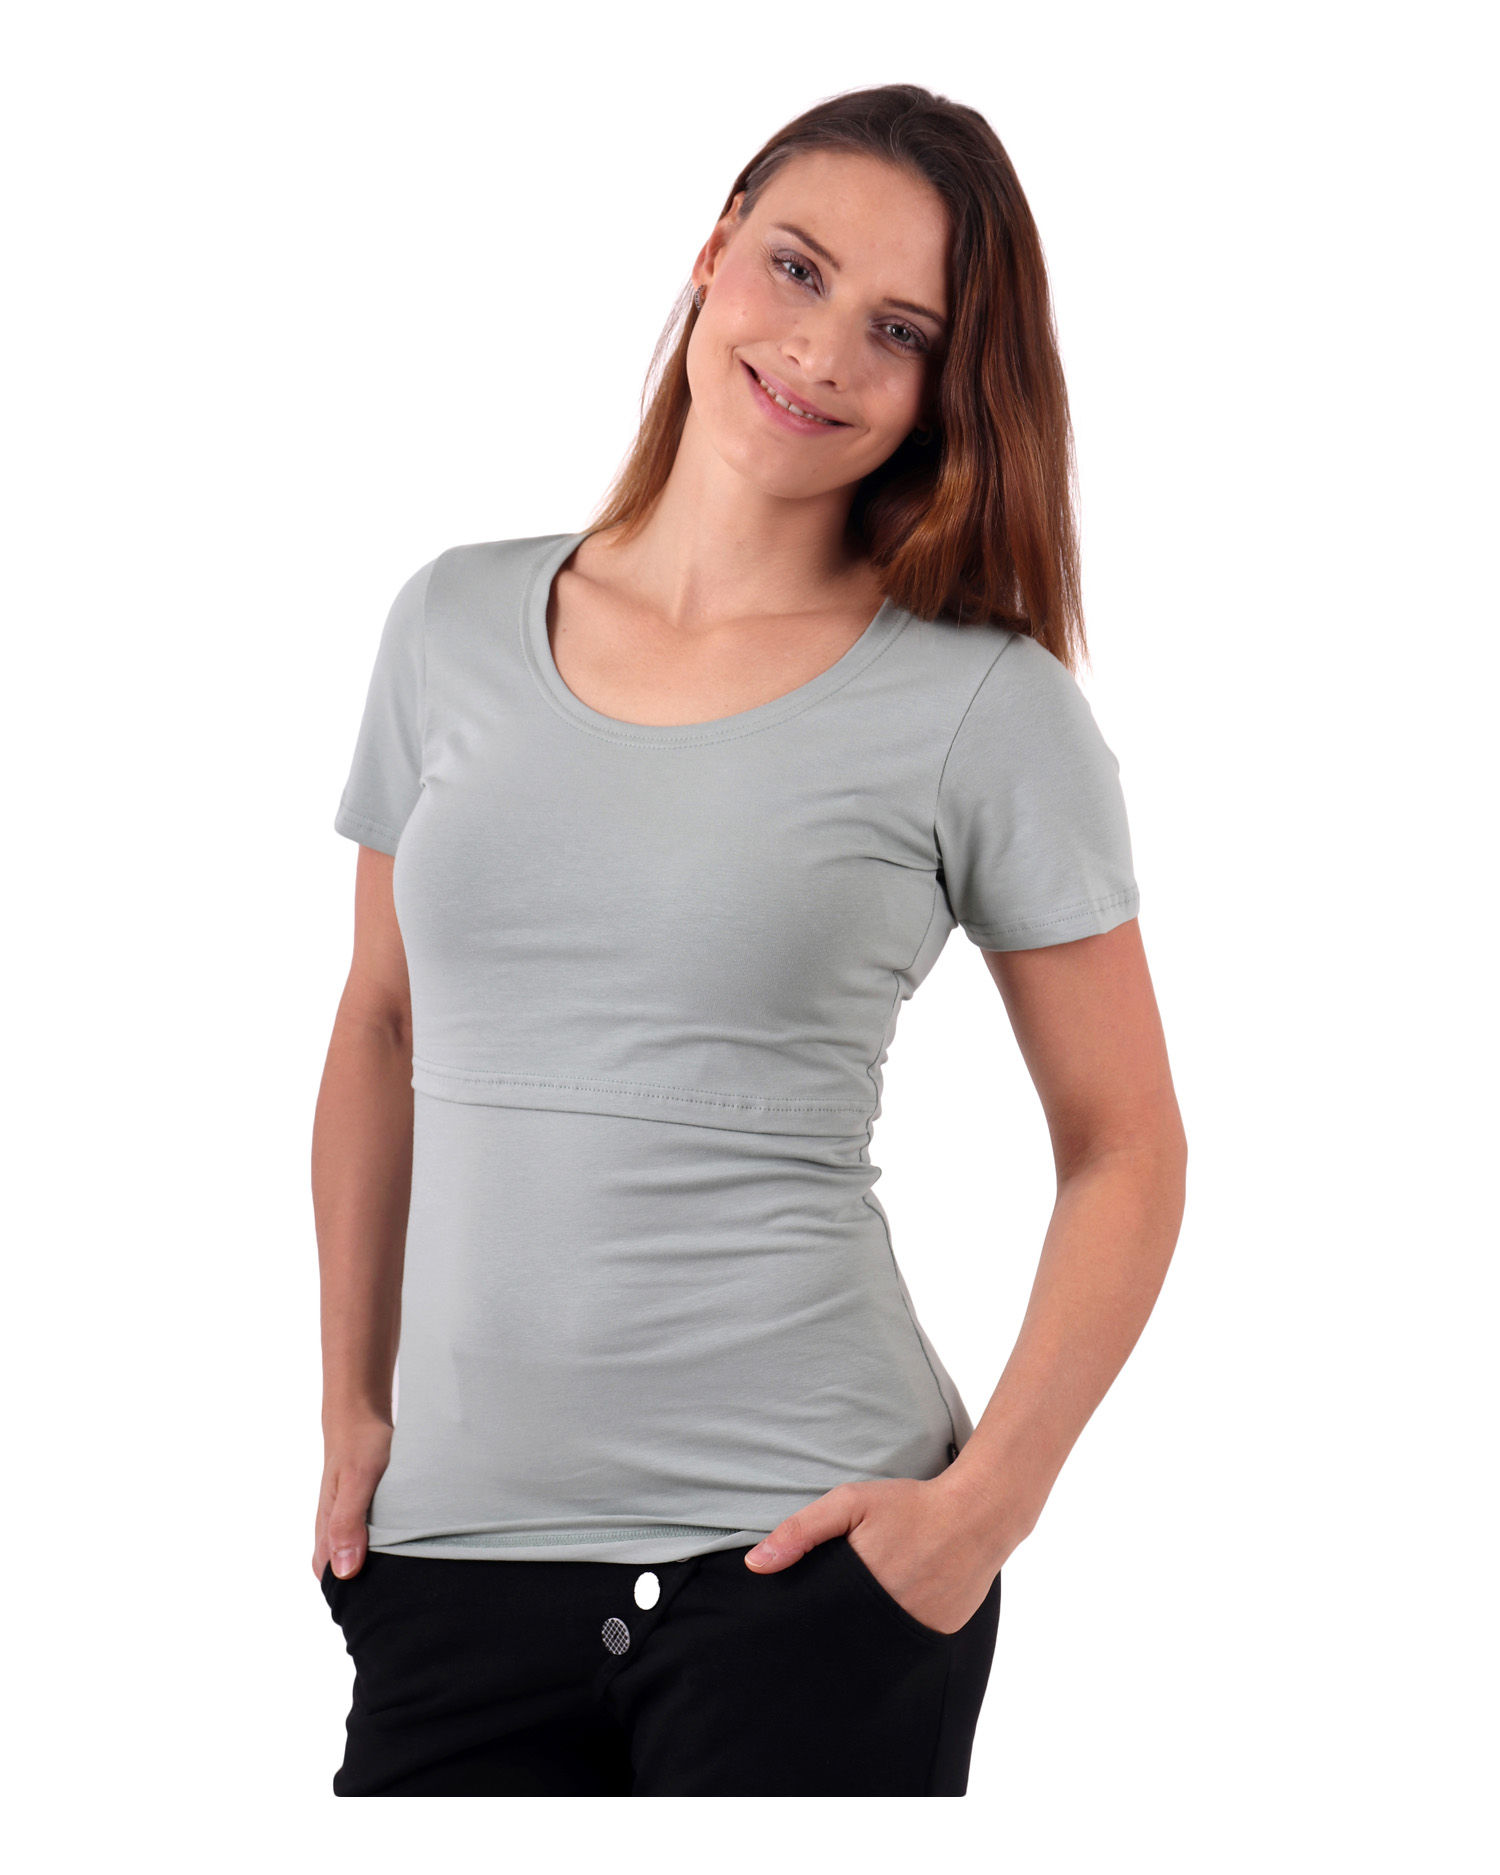 Breast-feeding T-shirt Katerina, short sleeves, olive